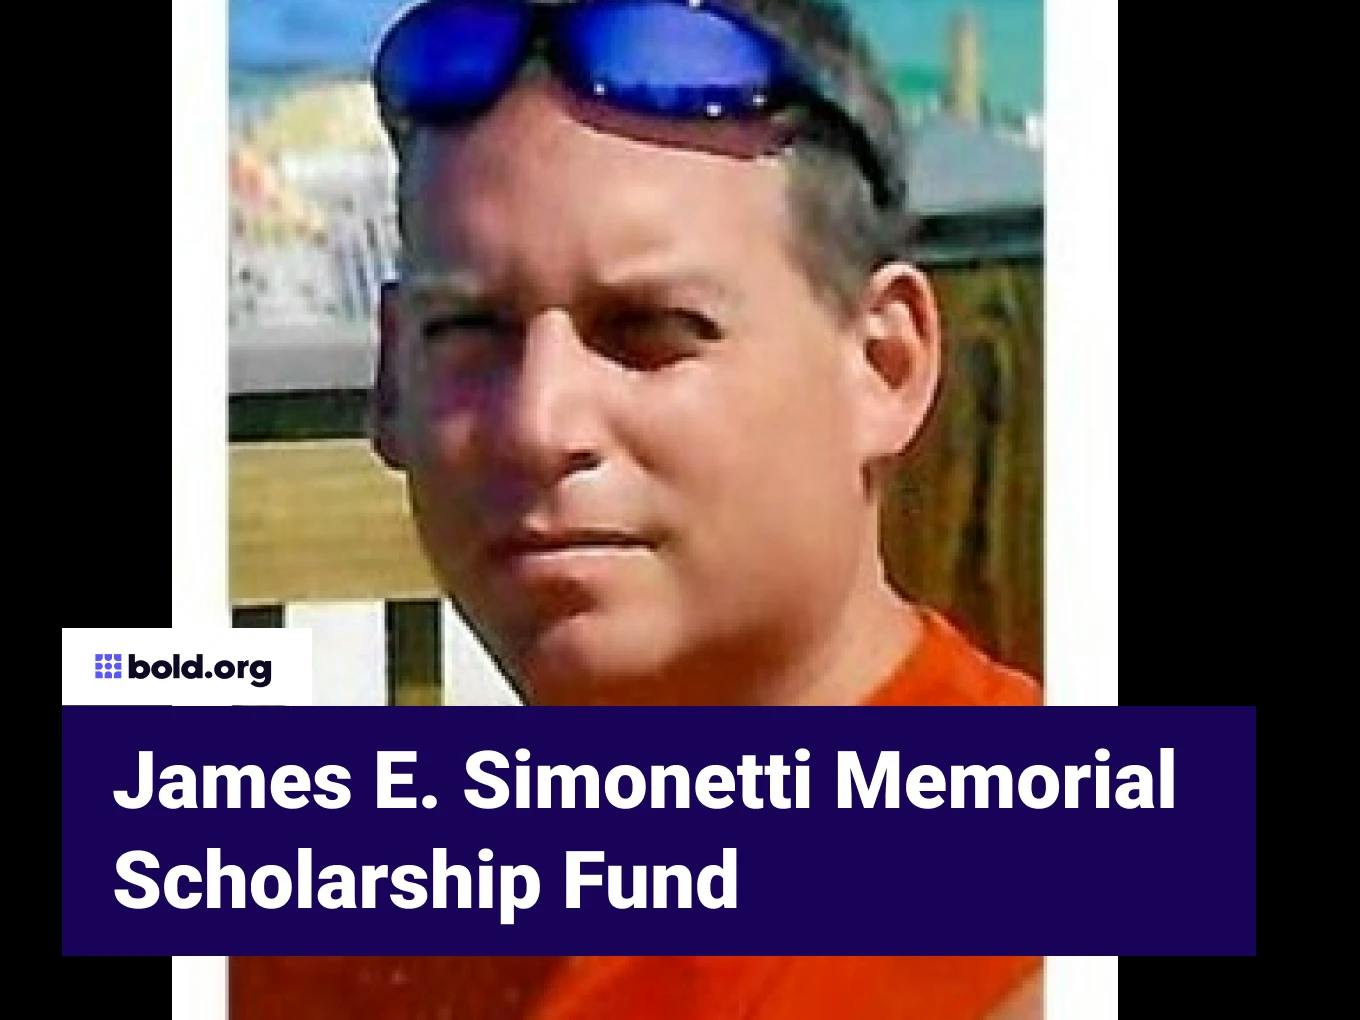 James E. Simonetti Memorial Scholarship Fund